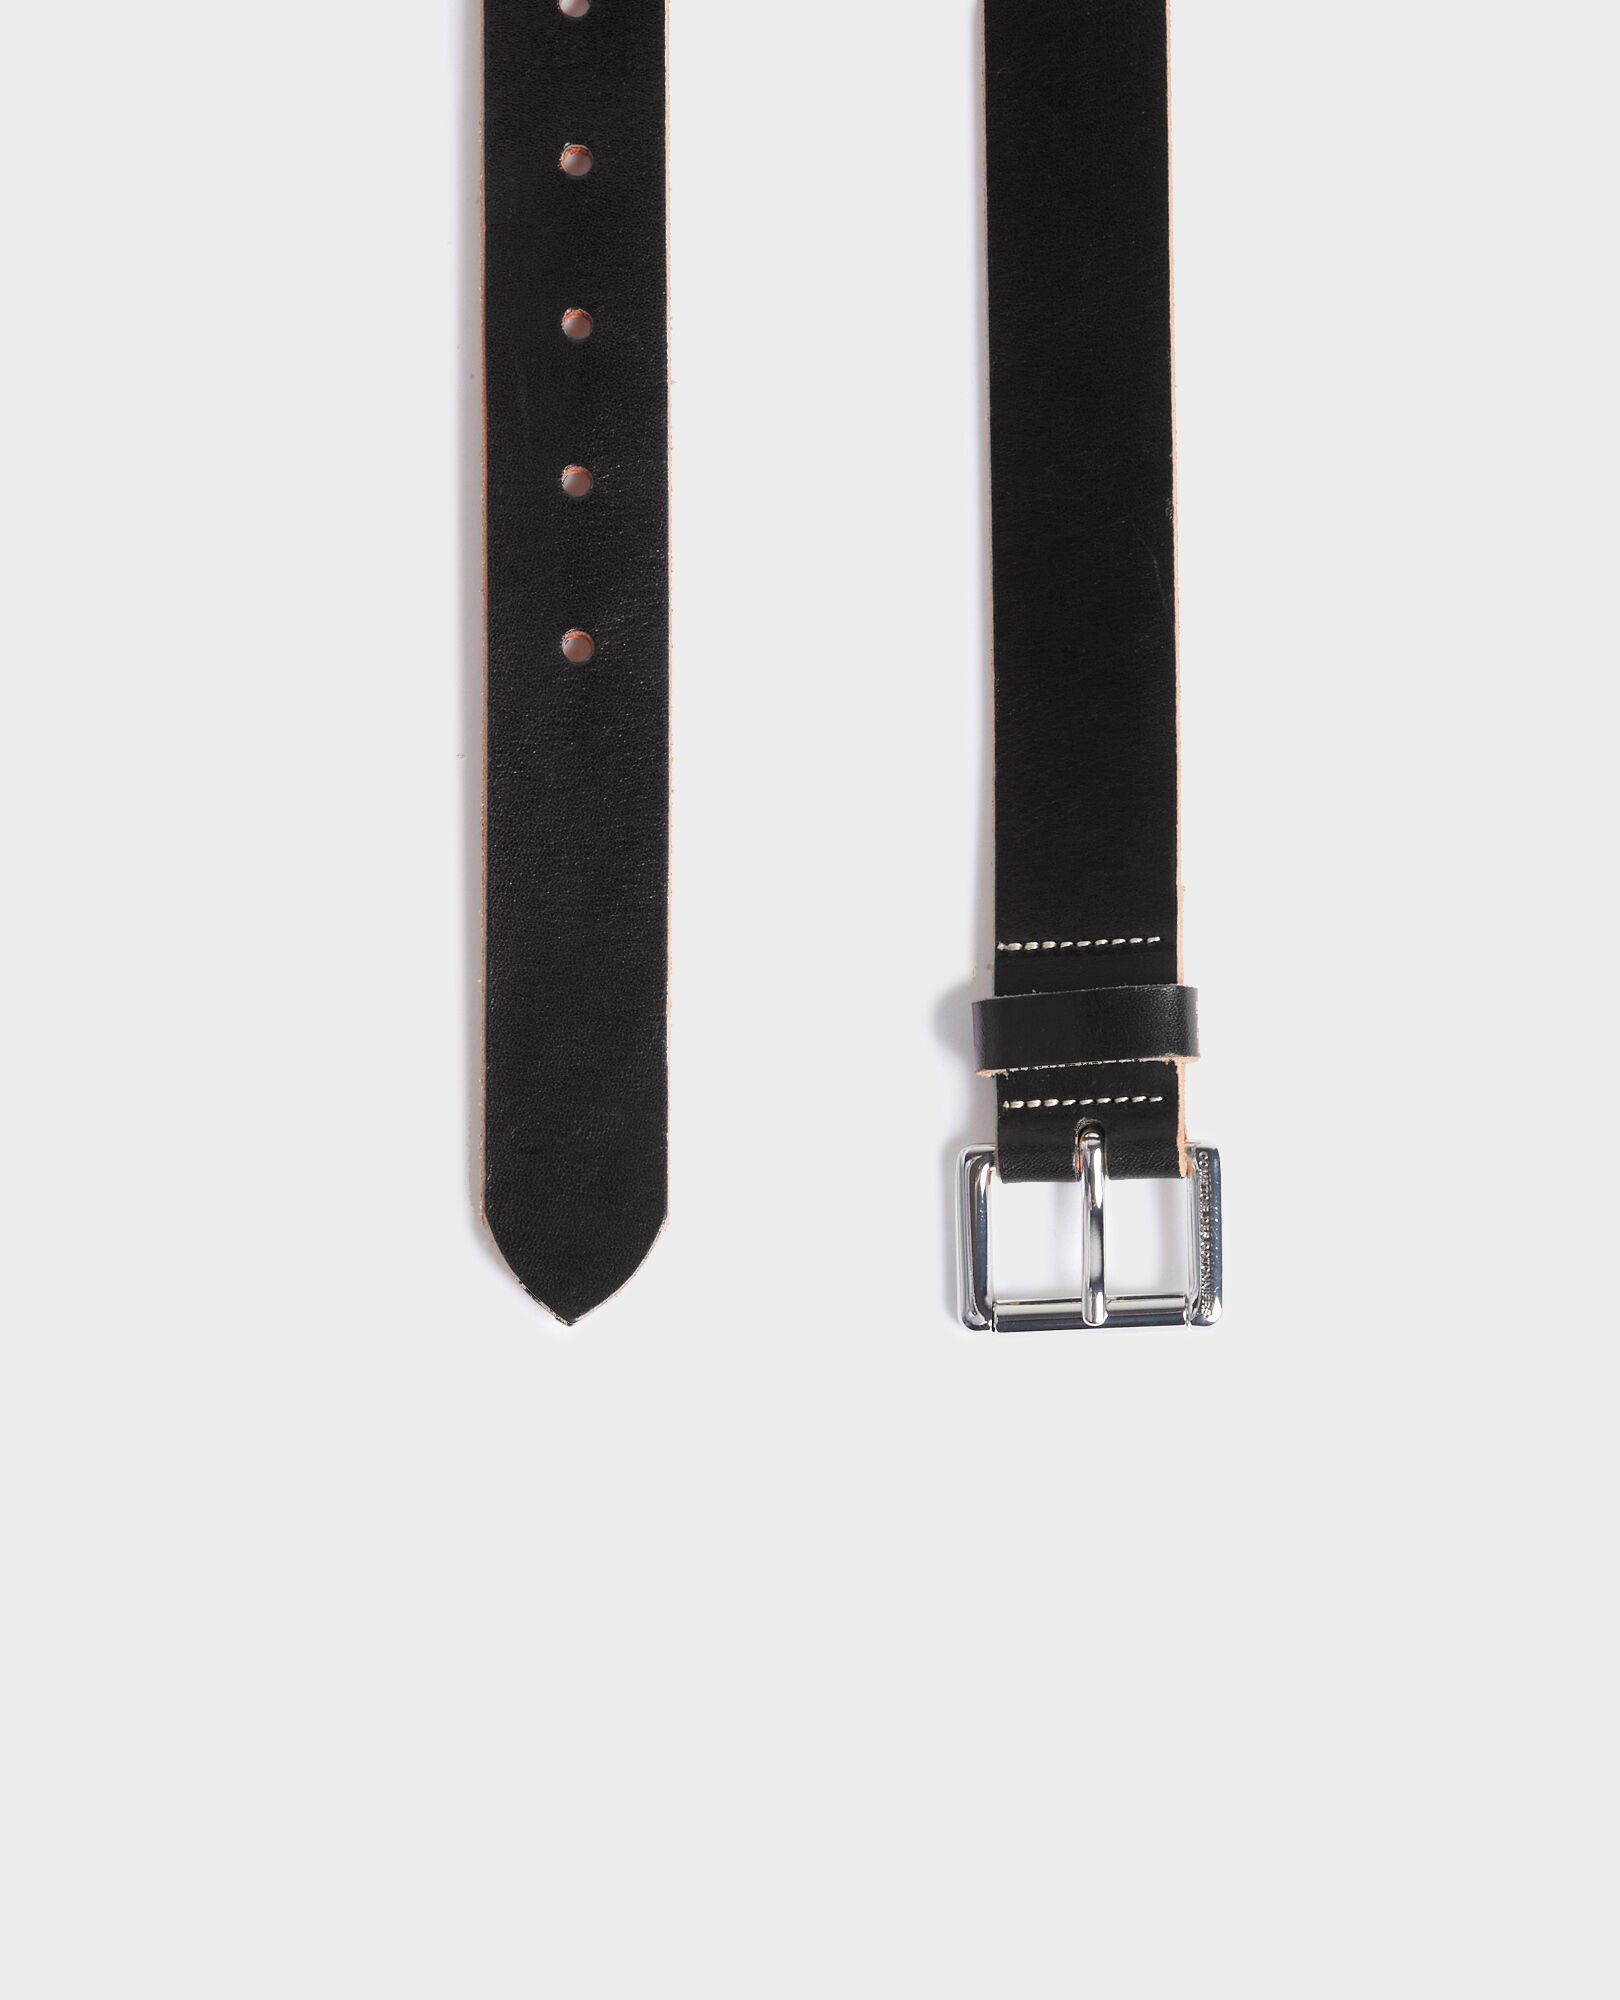 Leather belt Black beauty Noyau